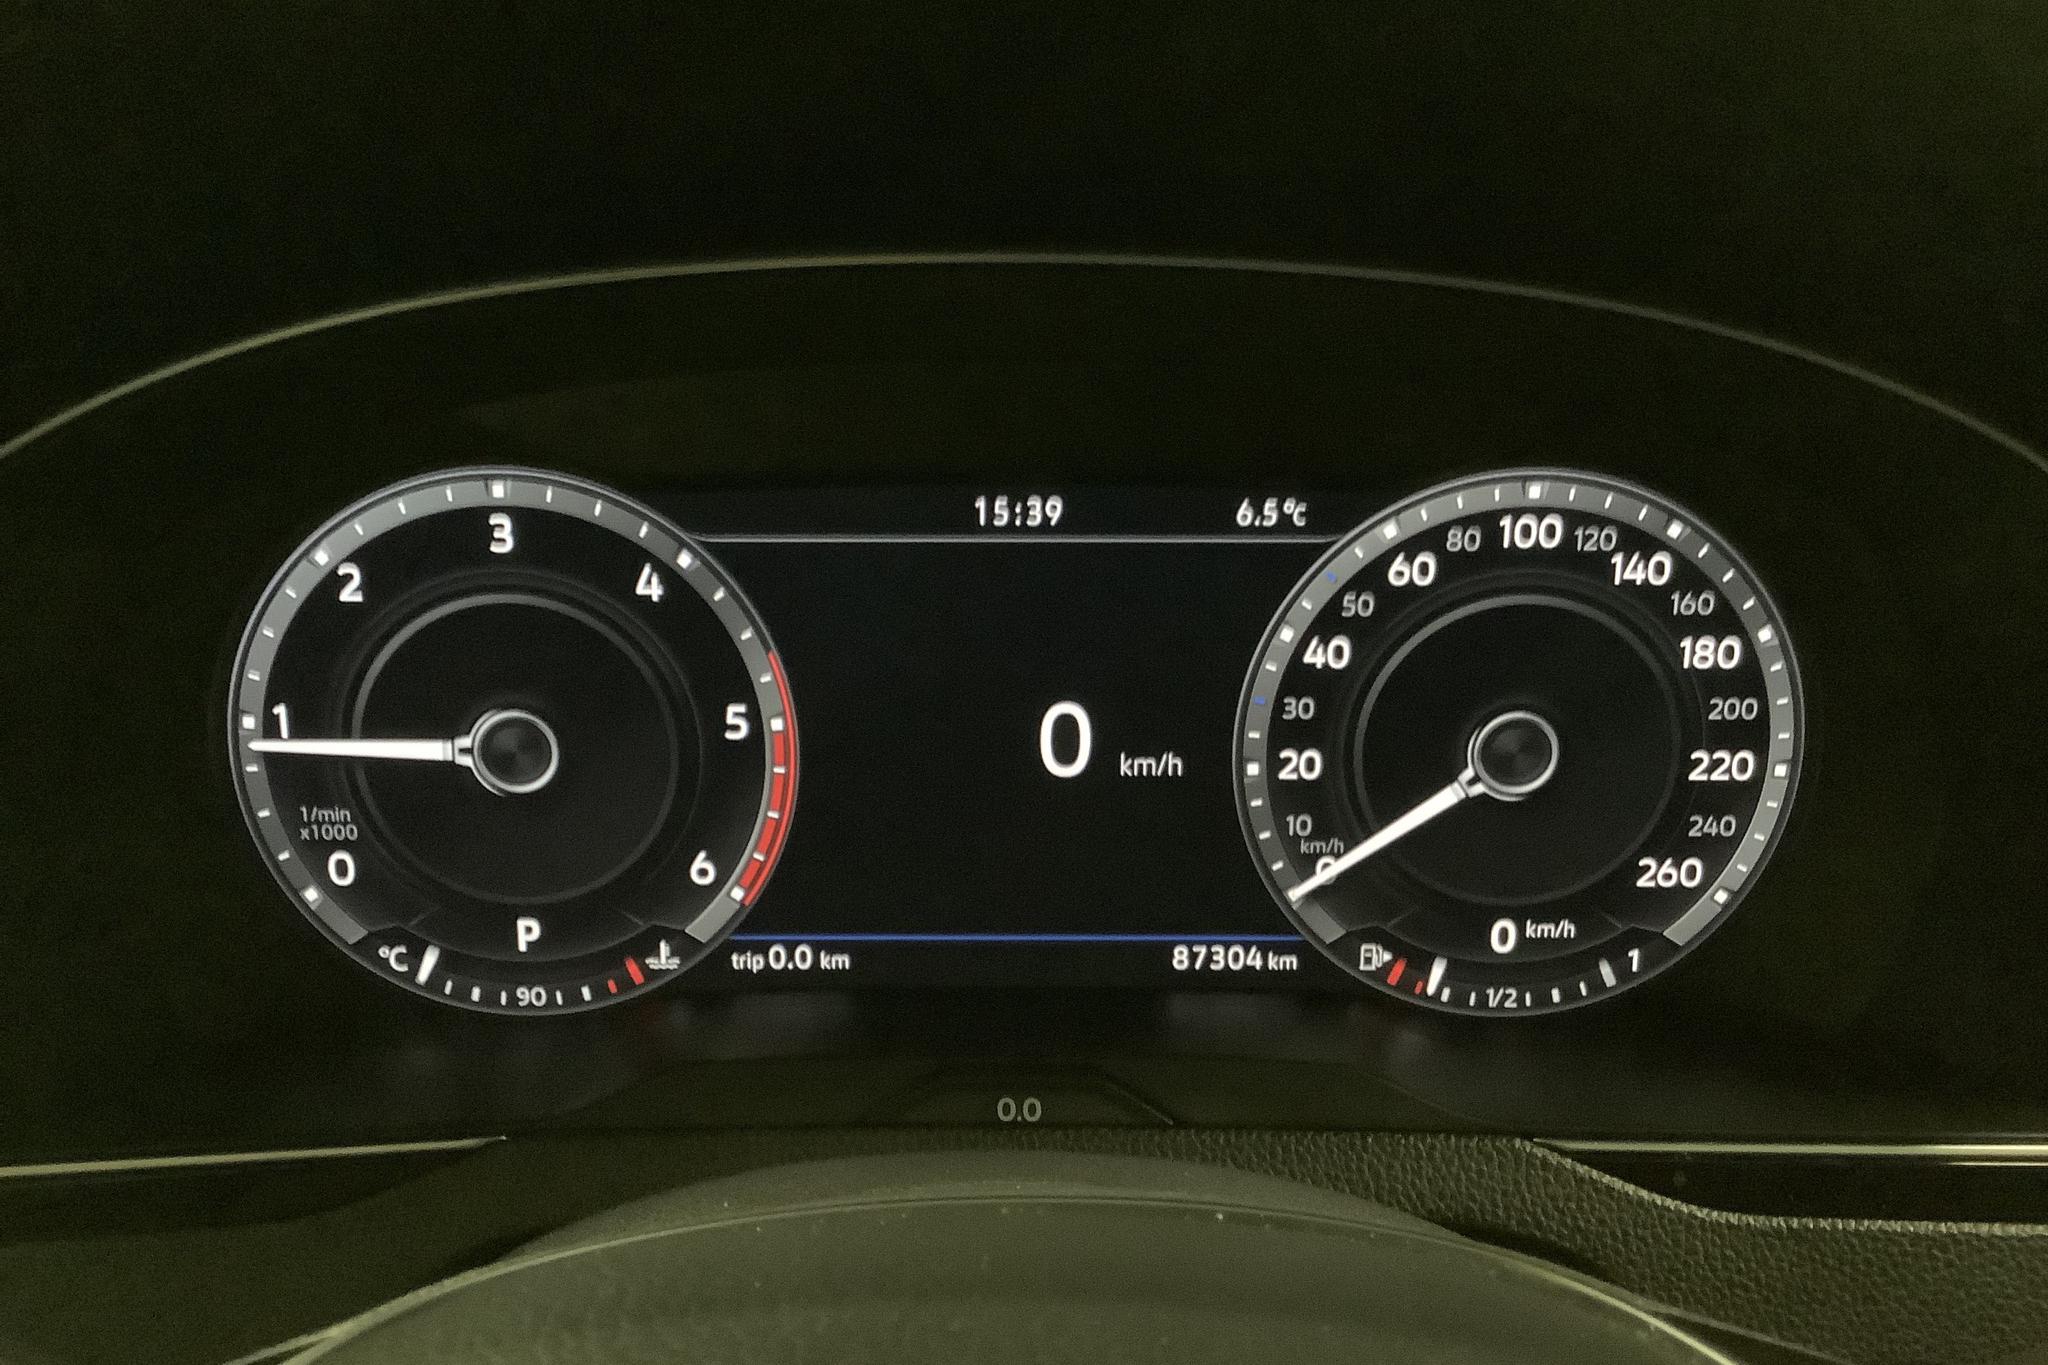 VW Passat Alltrack 2.0 TDI Sportscombi 4MOTION (190hk) - 8 731 mil - Automat - svart - 2018